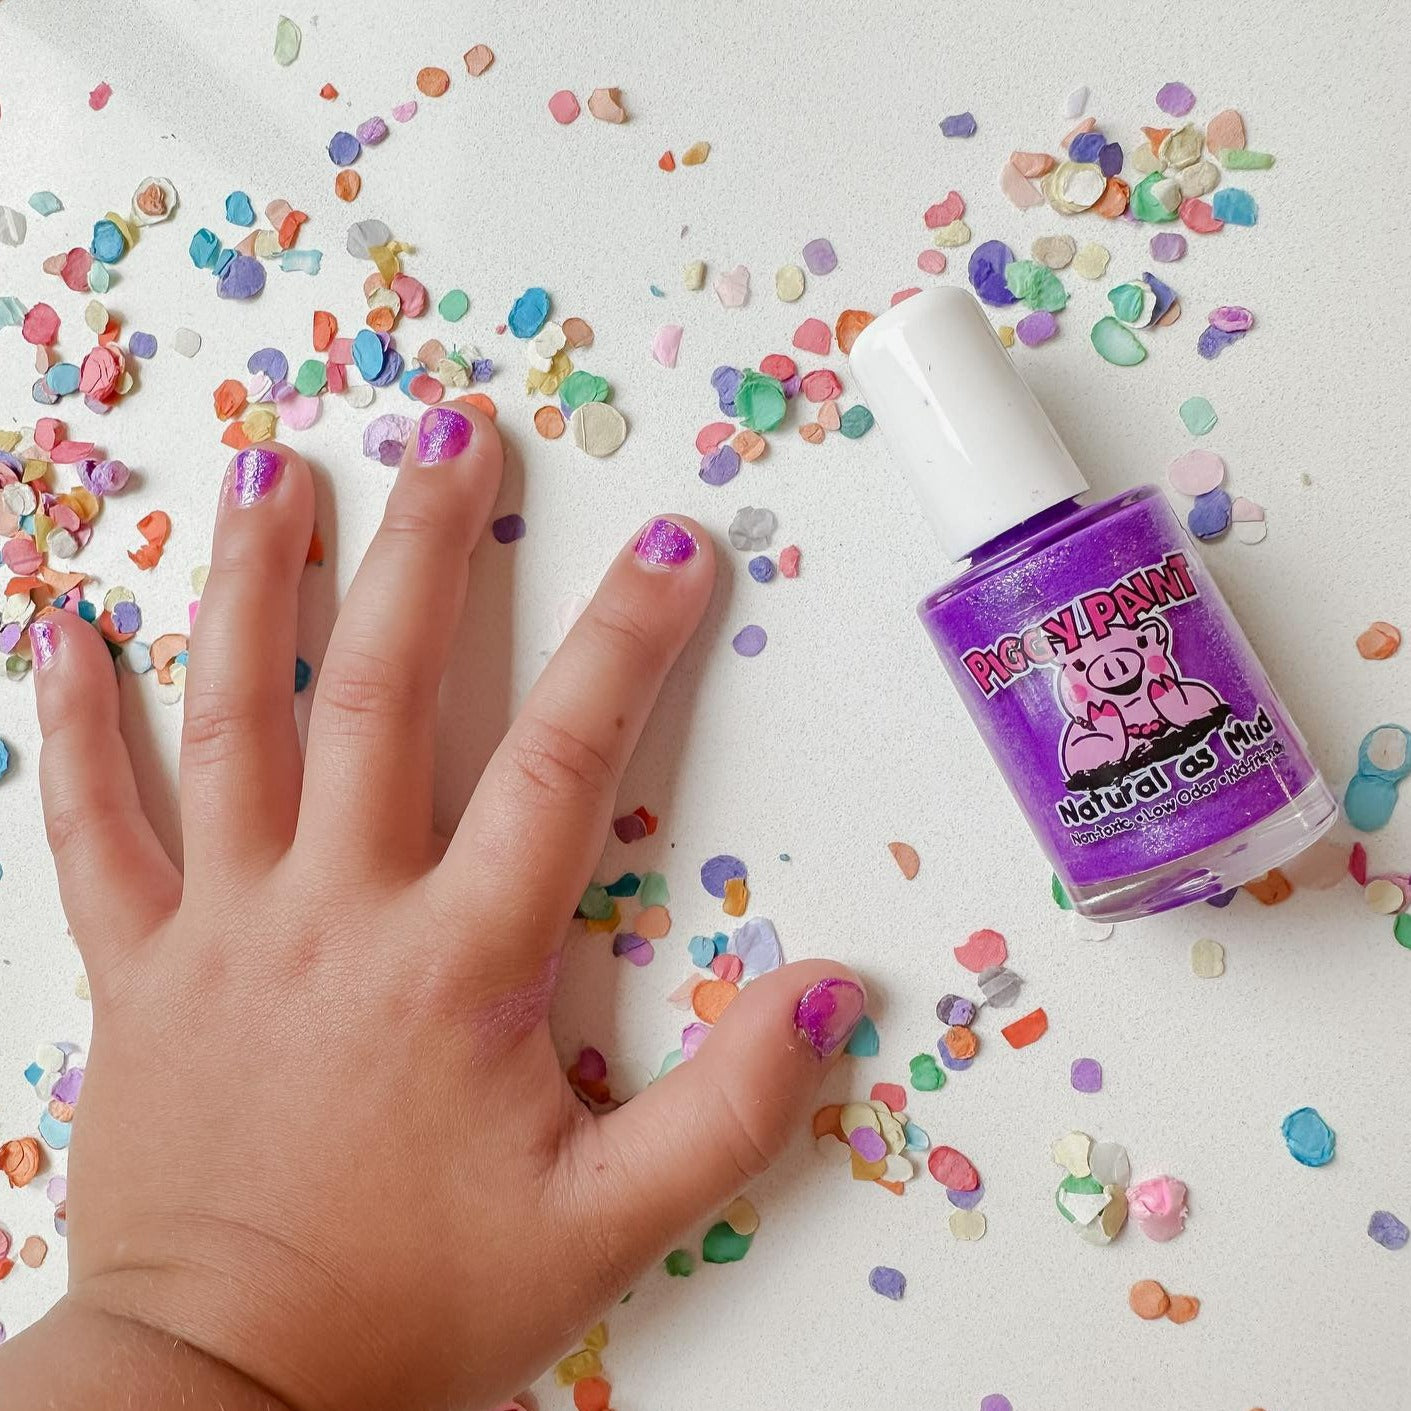 Premium Photo | A nail art design with purple glitter and purple glitter